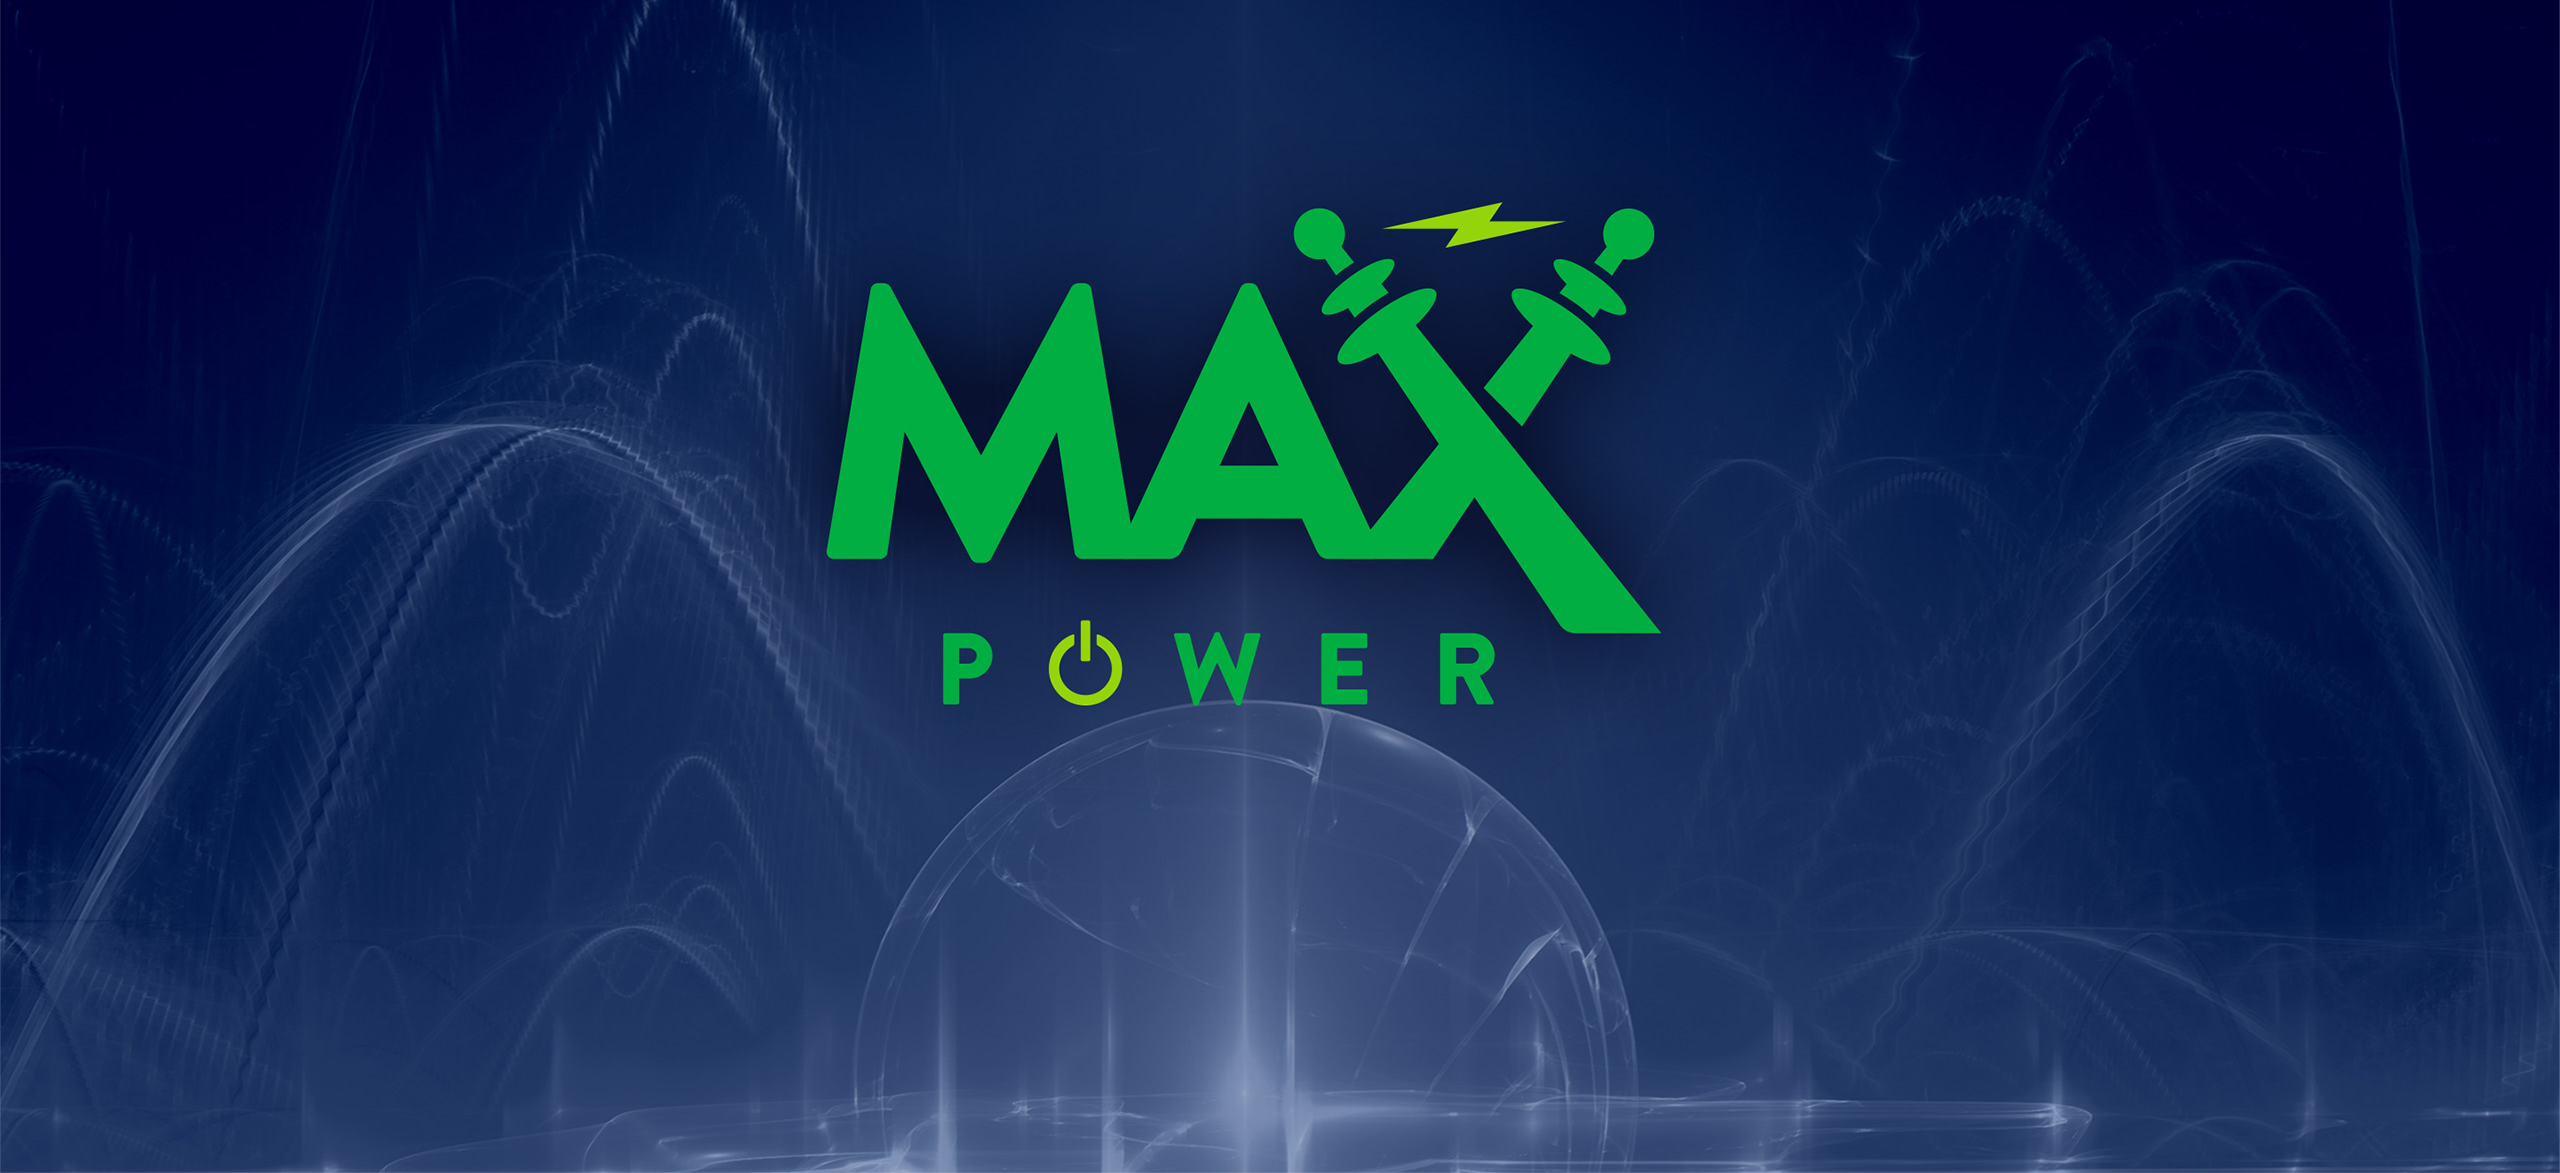 Max Power logo